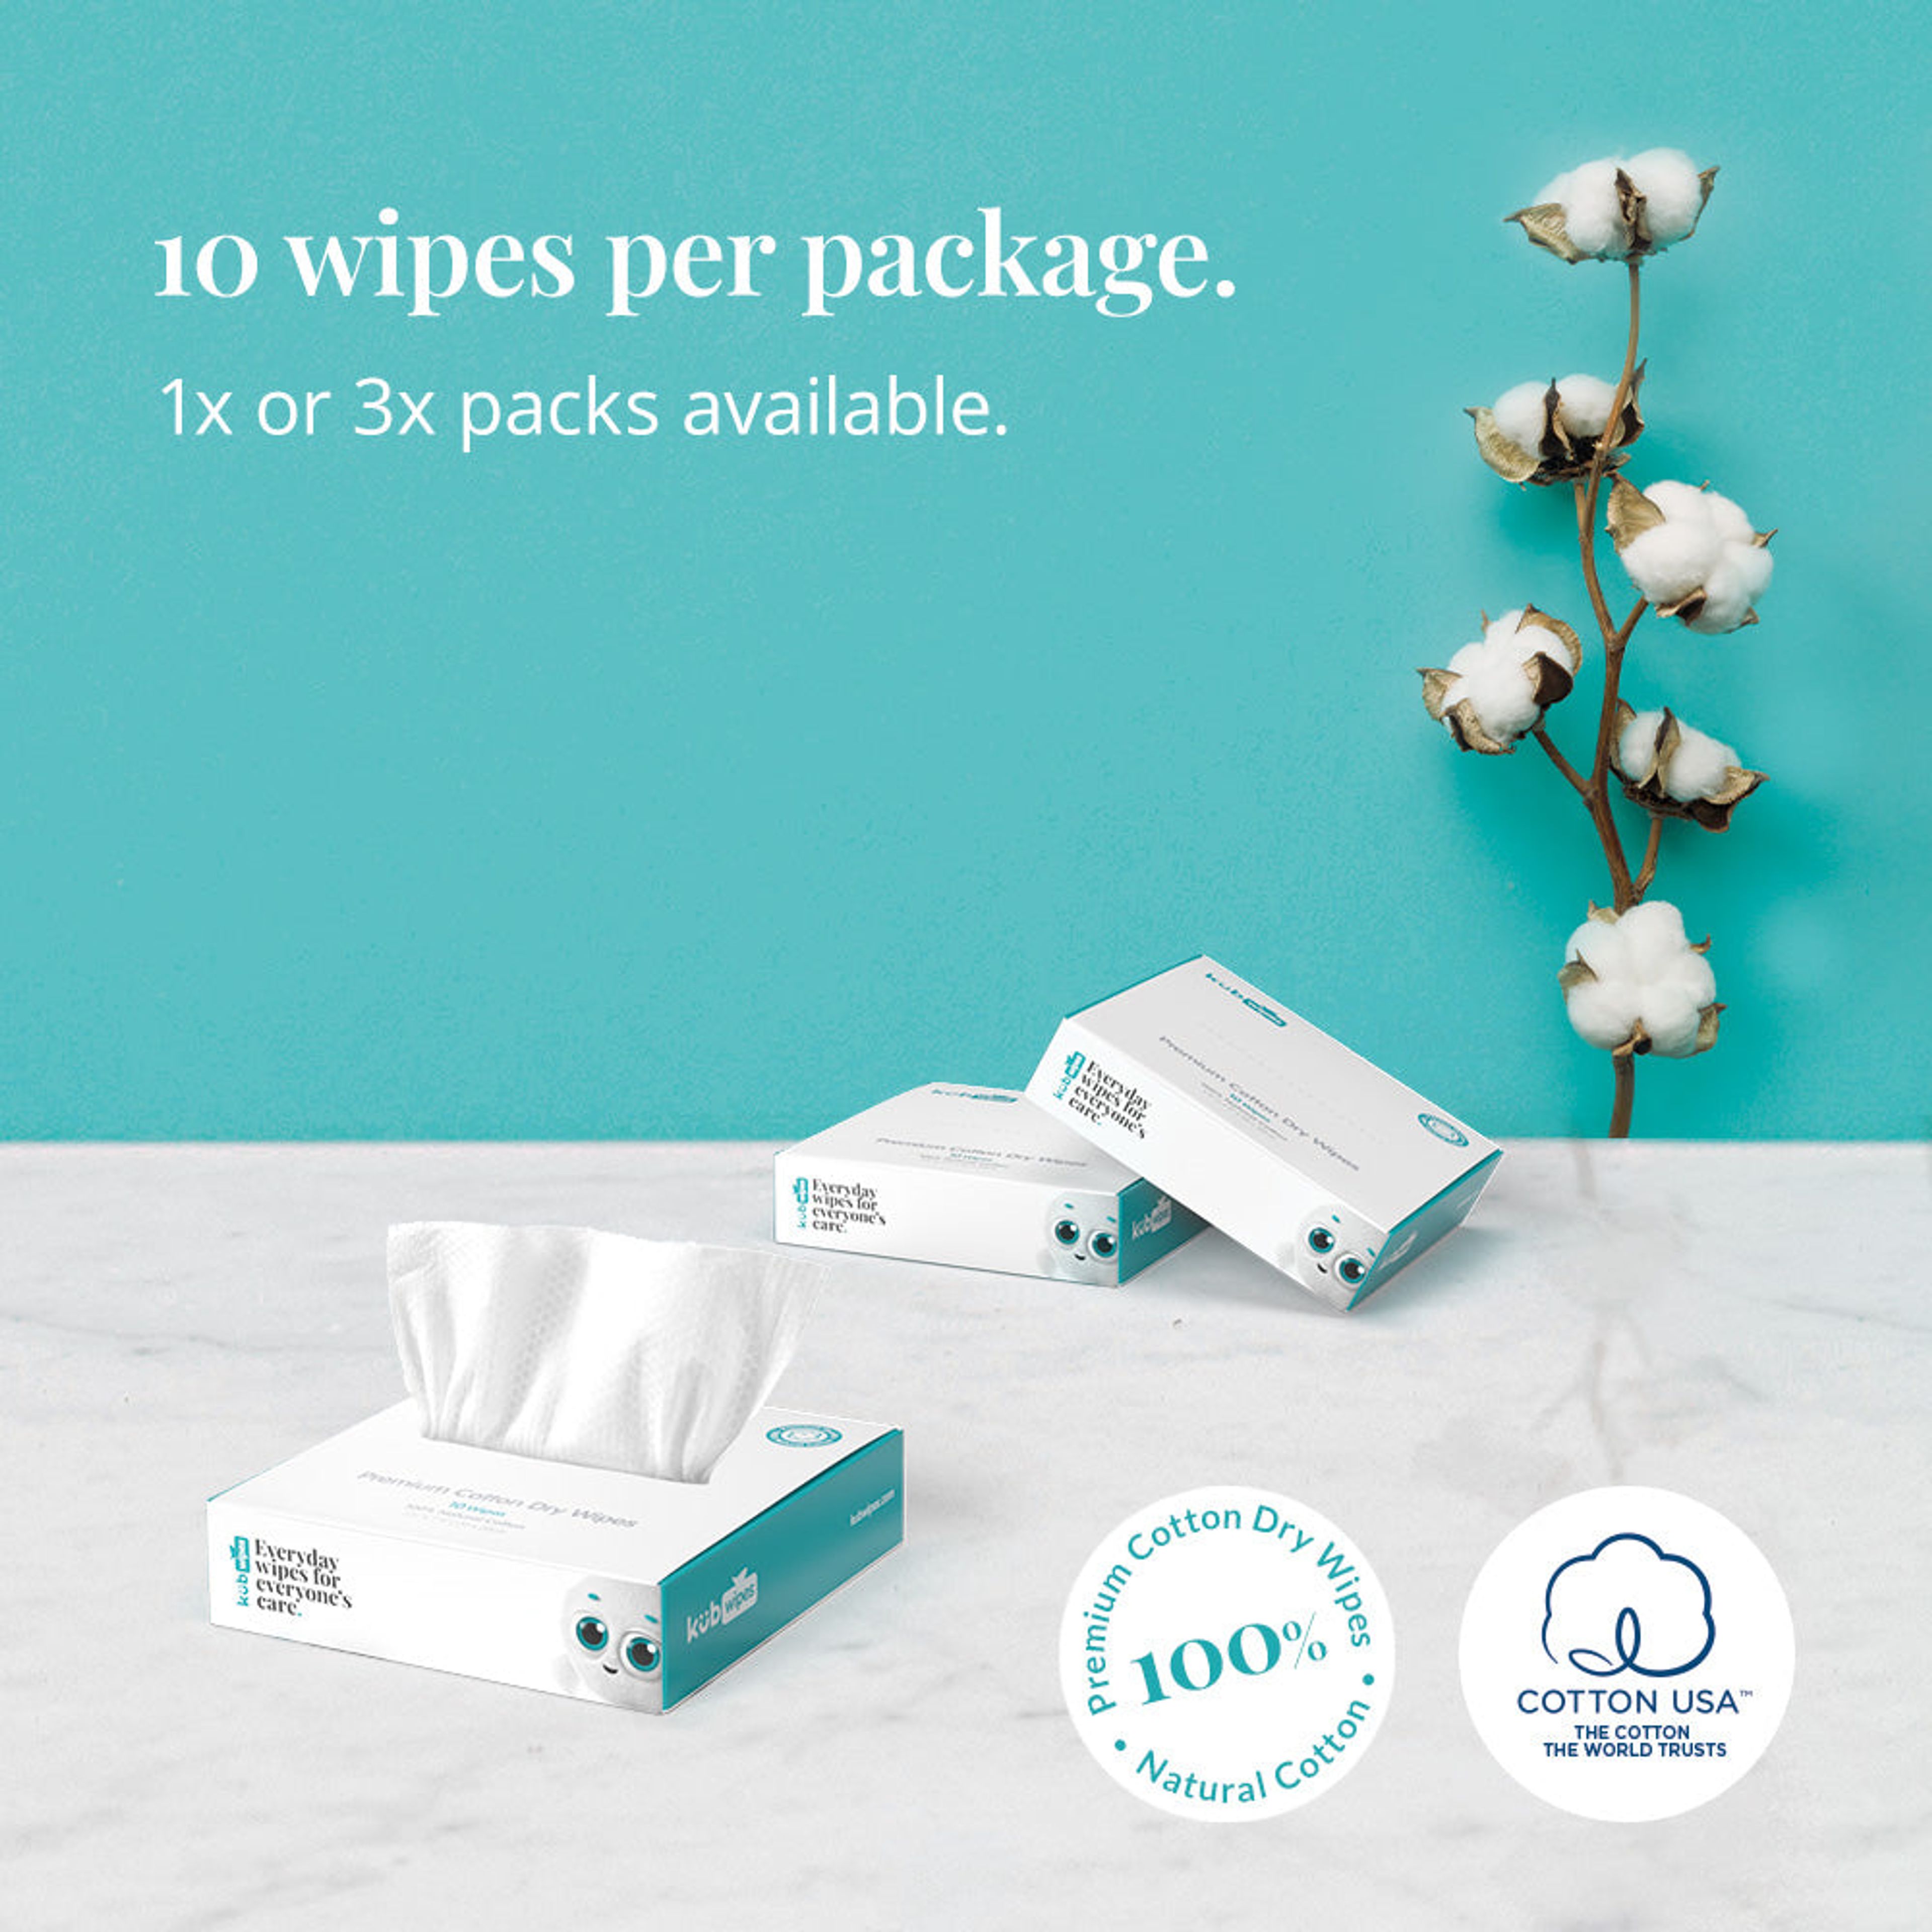 100% Natural Cotton Dry Wipes. Ultra-soft & Sensitive Cotton Tissues Mini Box (10 pcs).